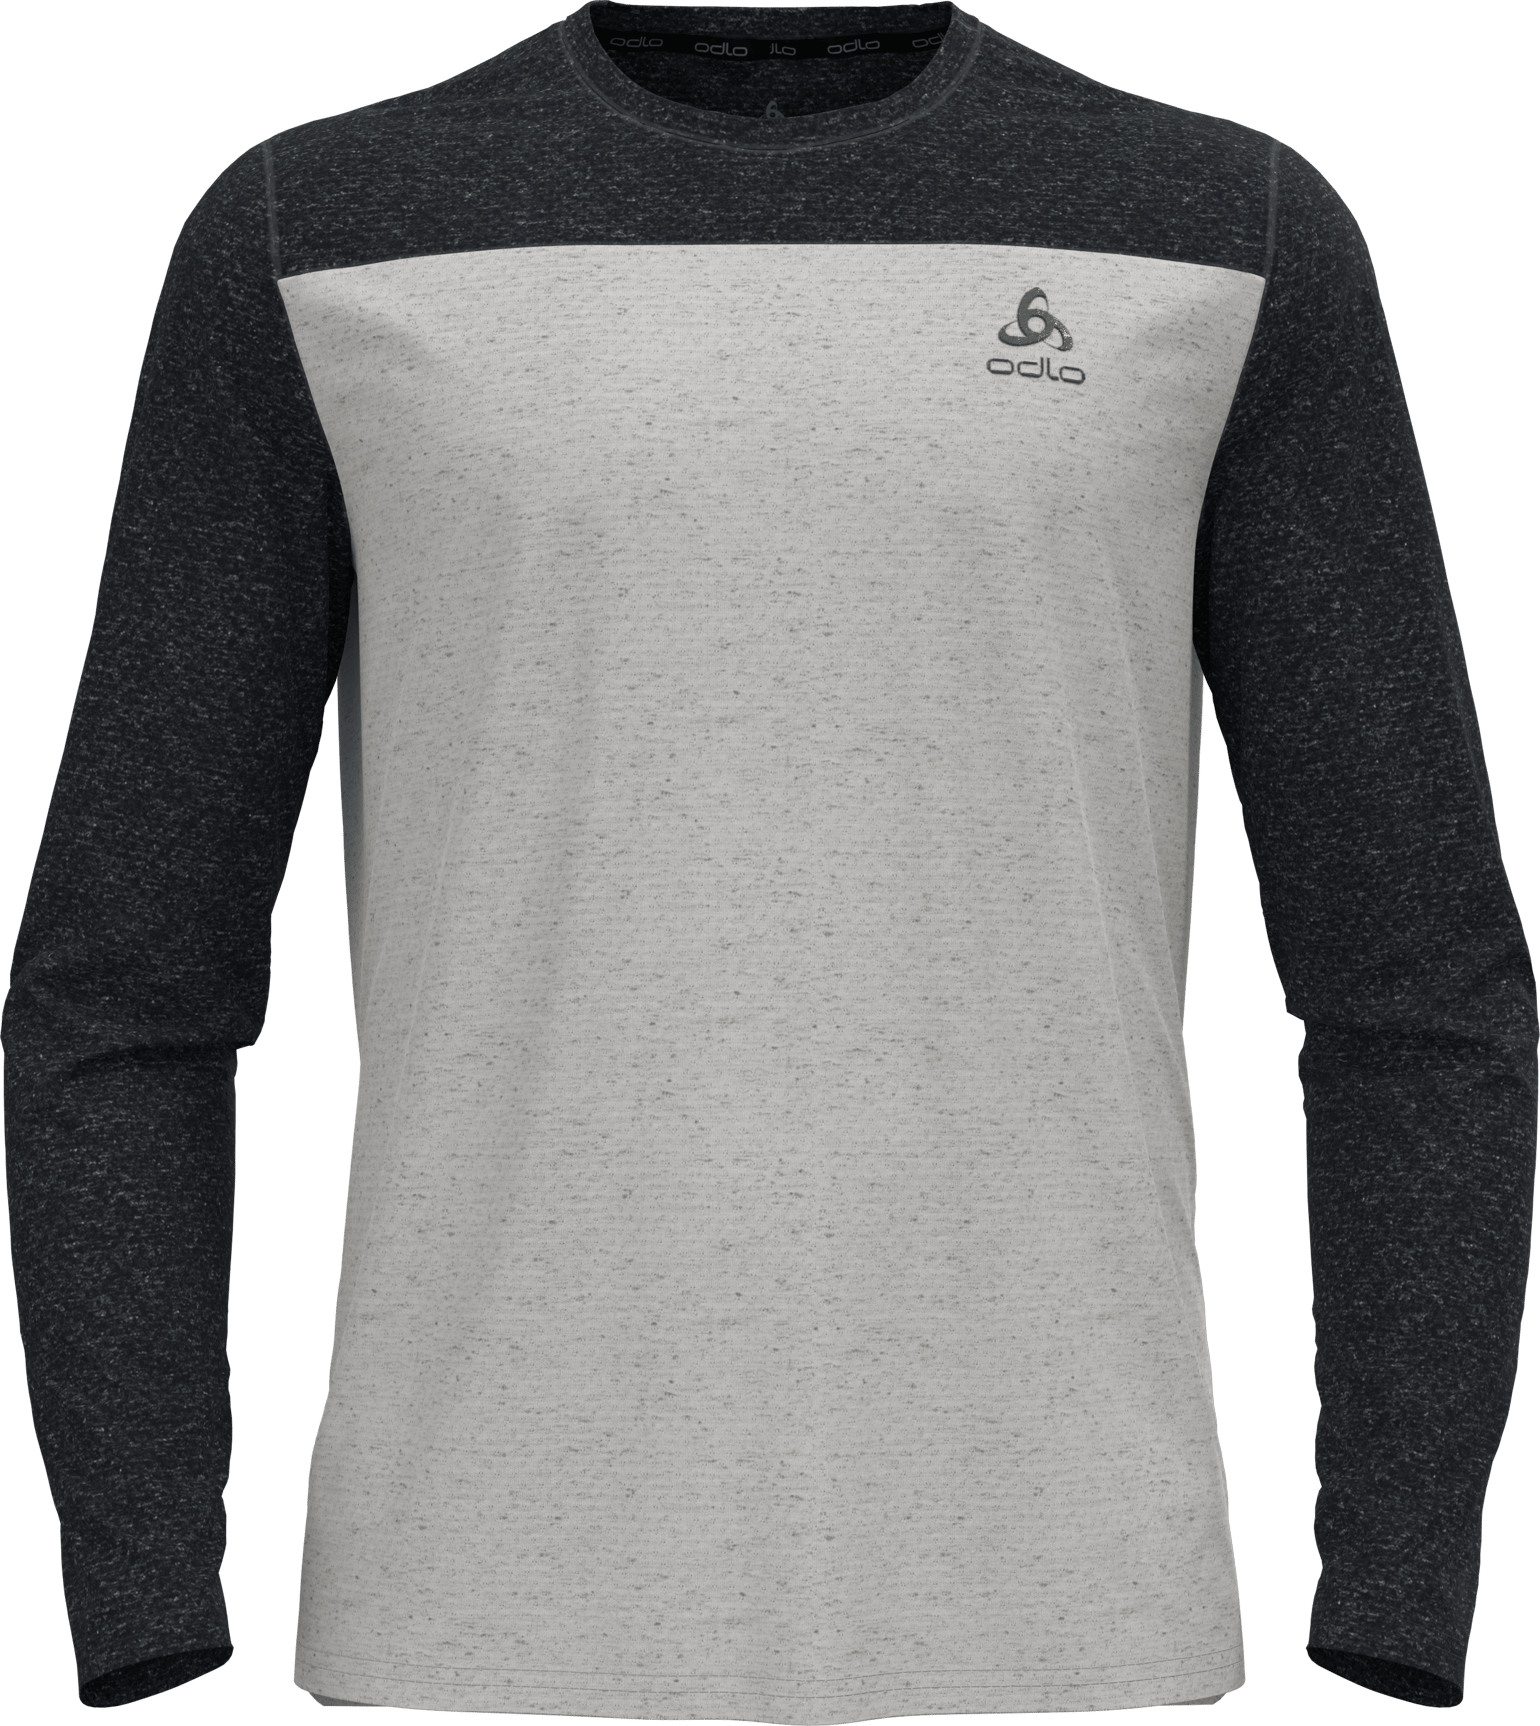 Odlo Men's T-shirt Crew Neck L/S X-Alp Linencool Black - Odlo Concrete Grey